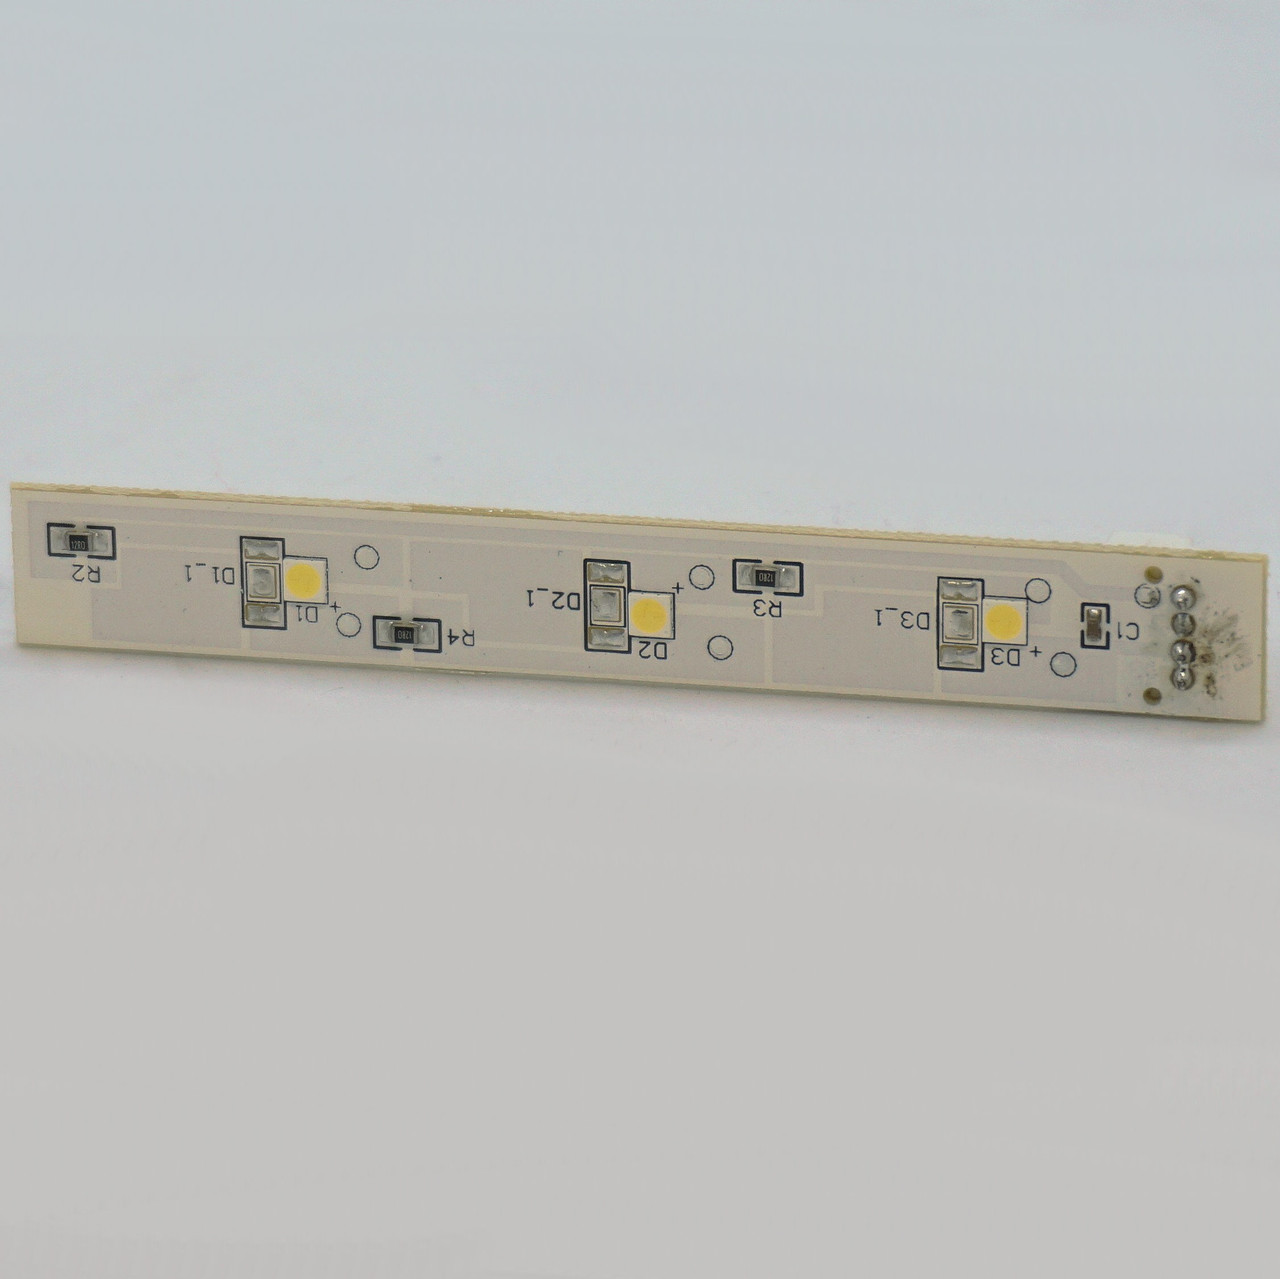 WR55X26671 LED light Board for Refrigerator General